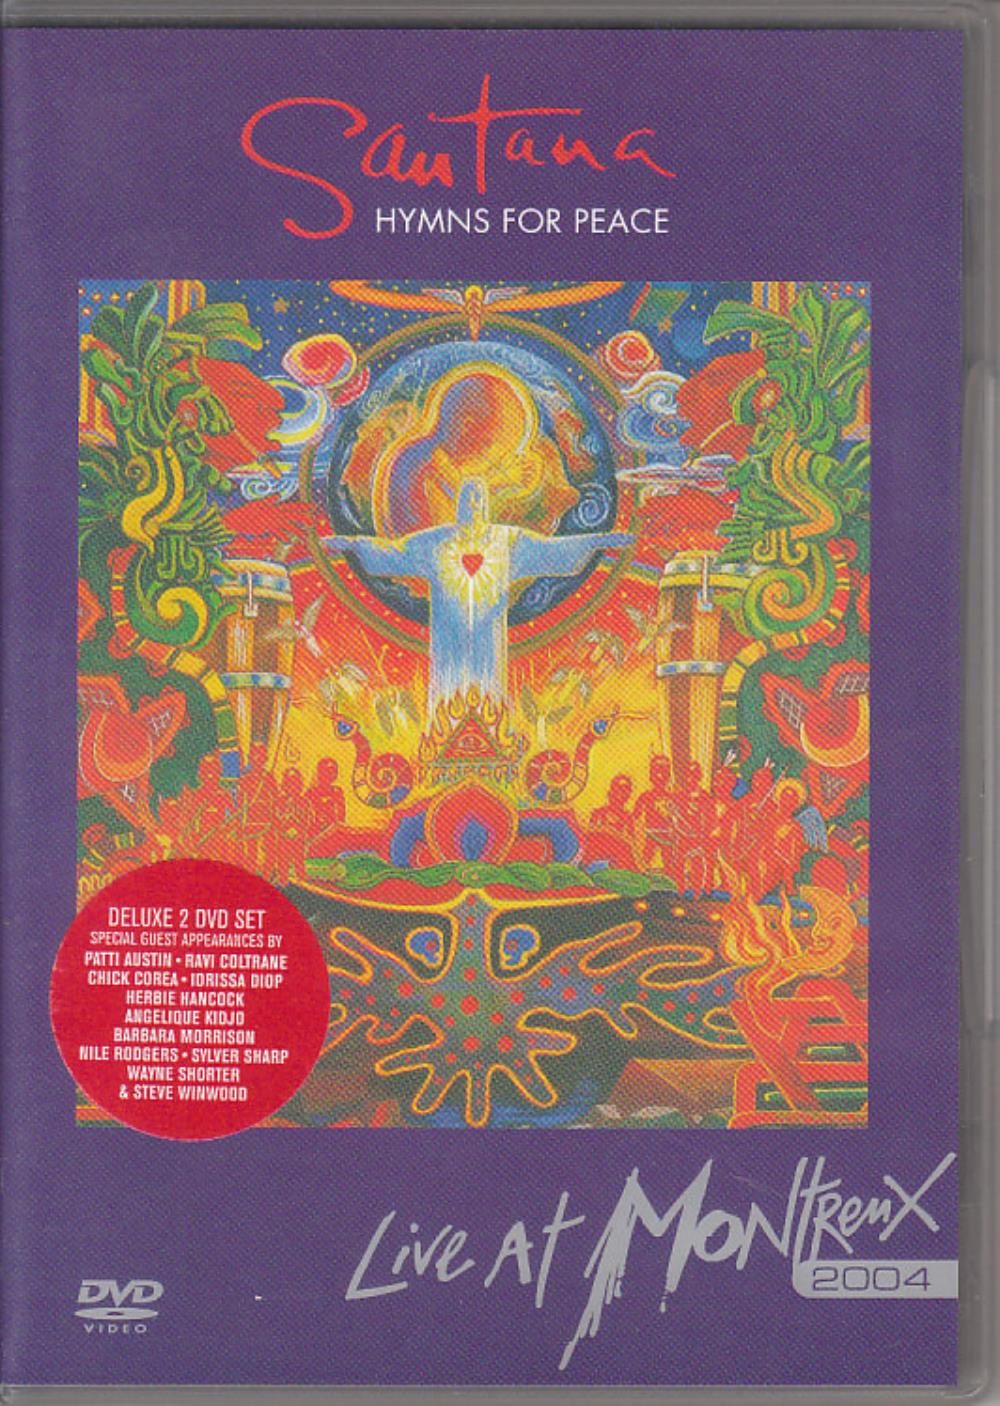 Santana Hymns for Peace - Live at Montreux 2004 album cover